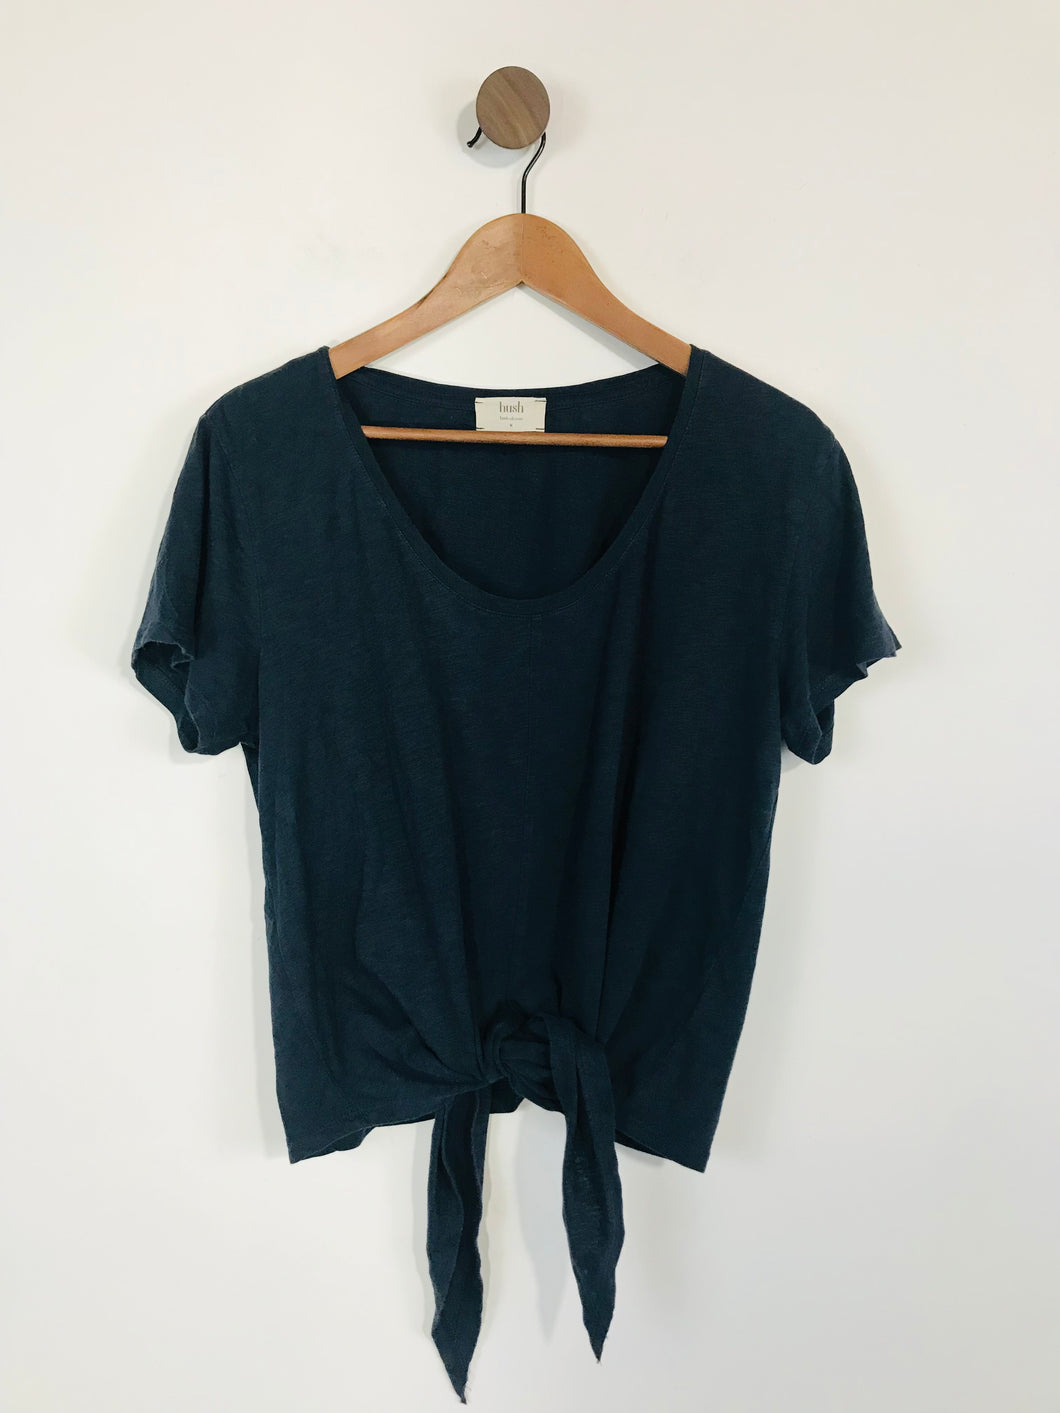 Hush Women's Cotton Tie up T-Shirt | M UK10-12 | Blue